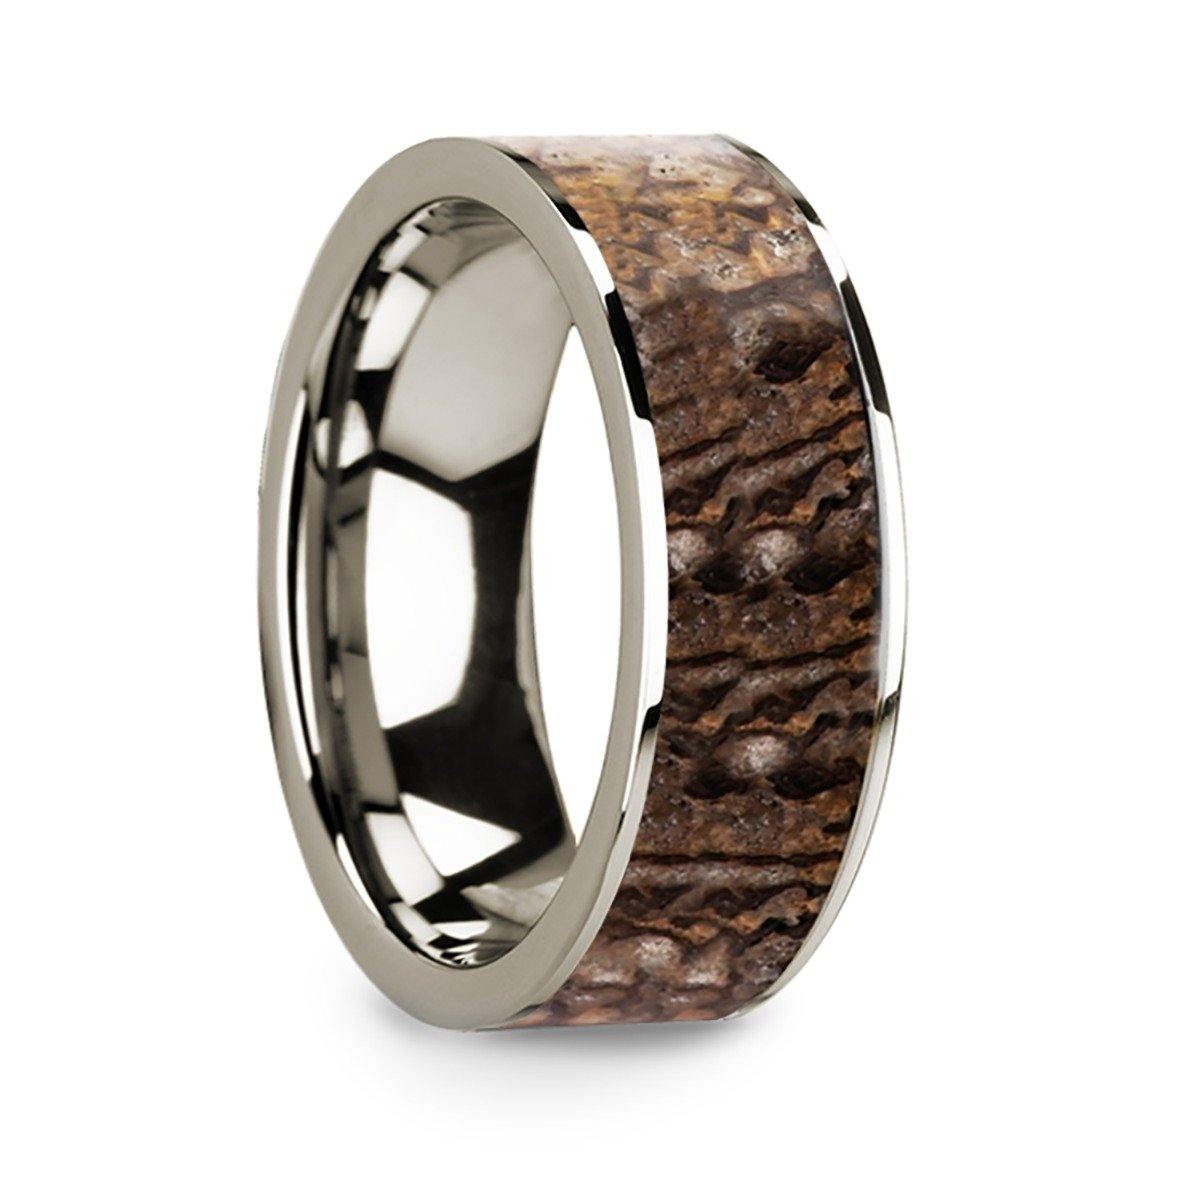 DIENNO - Polished 14k White Gold Men’s Flat Wedding Ring with Brown Dinosaur Bone Inlay - 8mm - The Rutile Ltd